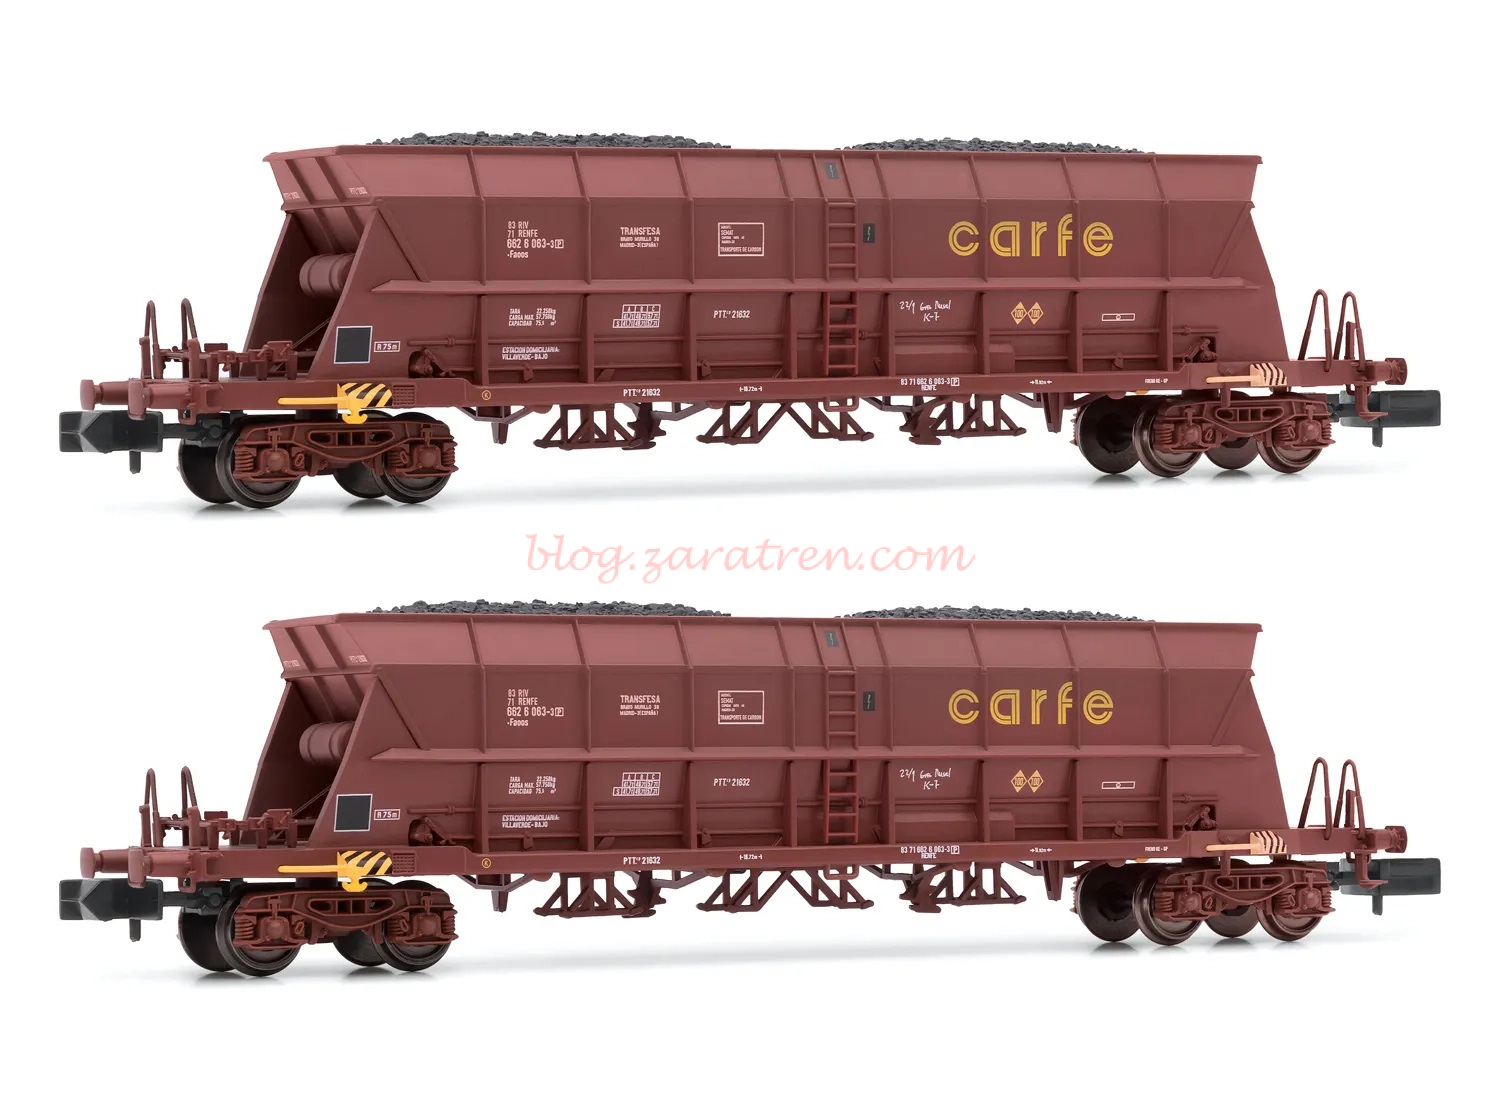 Arnold – Set de 2 vagones tolva, Faoos, para carbón, decoración marrón, «Semat/Carfe», Epoca IV-V, Escala N, Ref: HN6551